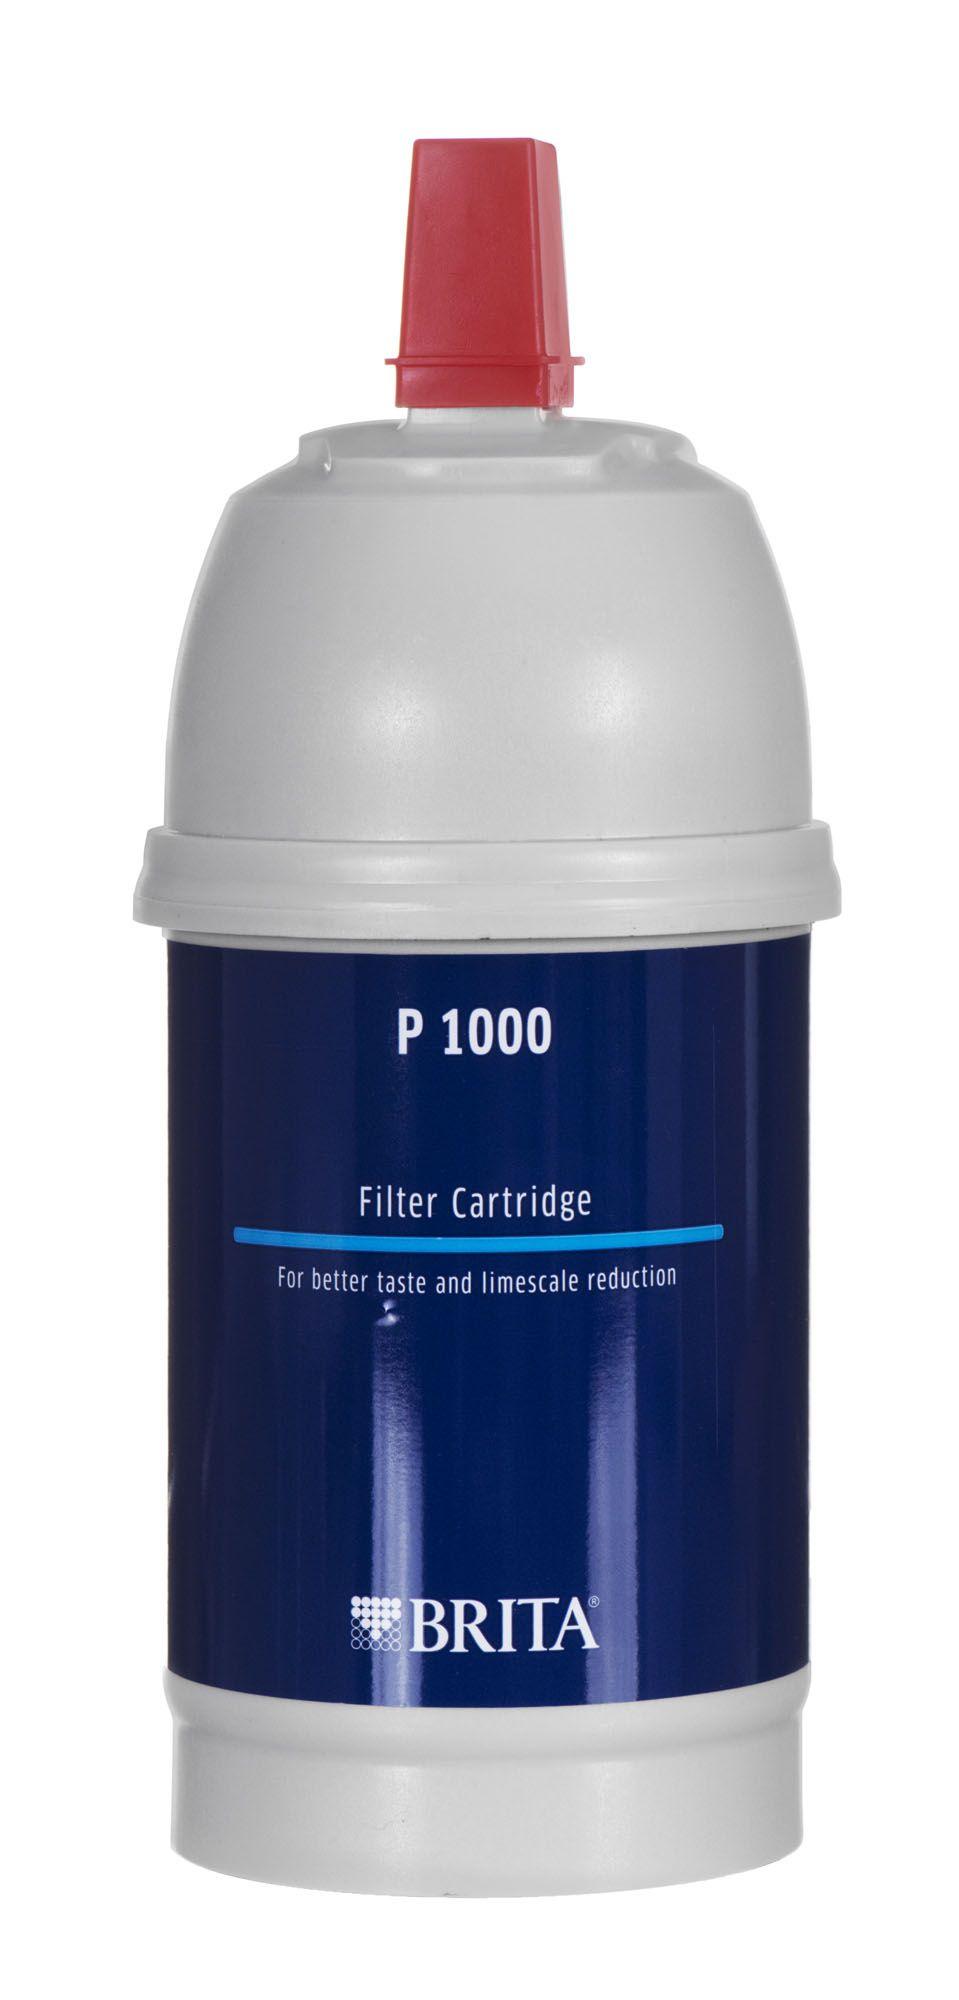 Brita p1000 filter cartridge